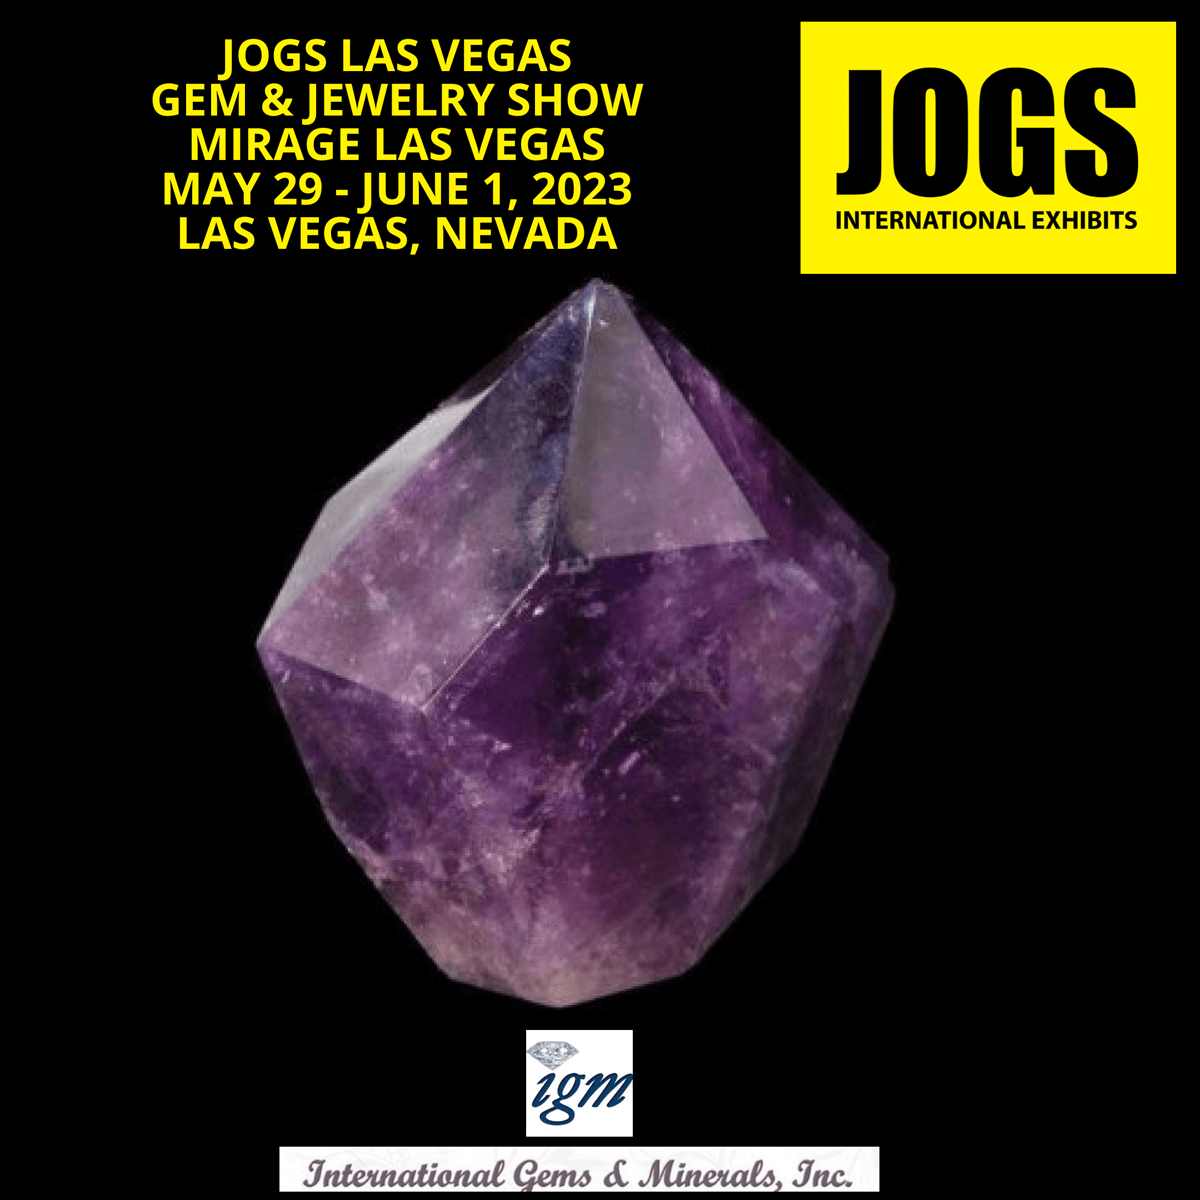 JOGS Las Vegas Gem & Jewelry Show 2023